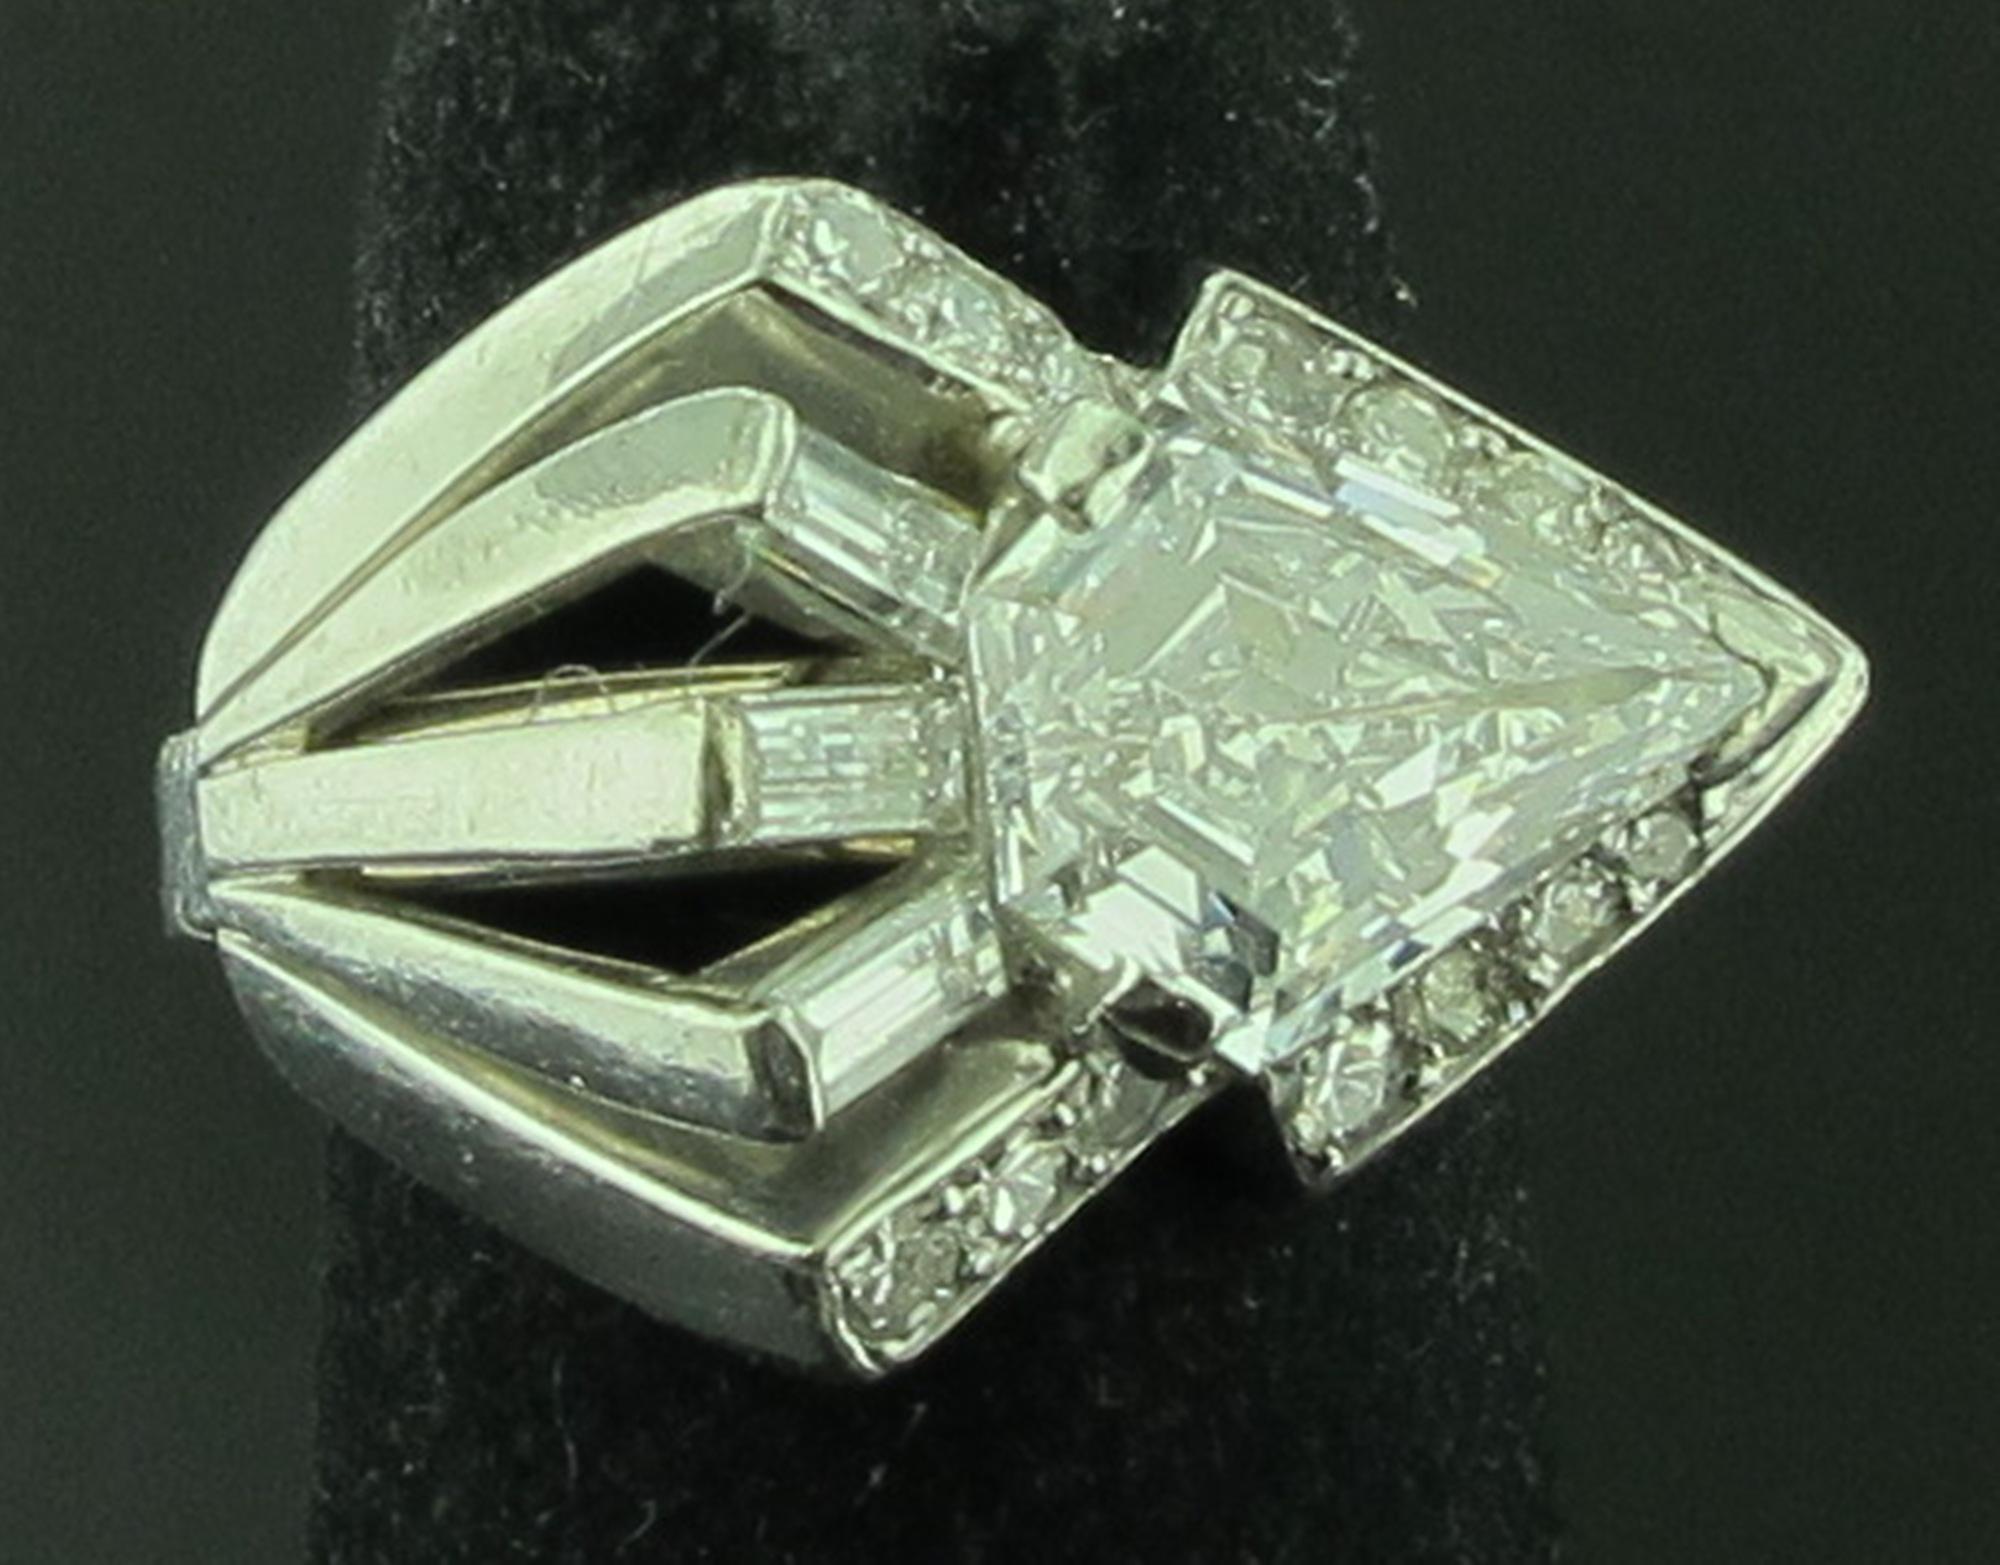 GIA Certified D Color 1.85 Carat Shield Cut Diamond Ring in Platinum/14 Karat 1